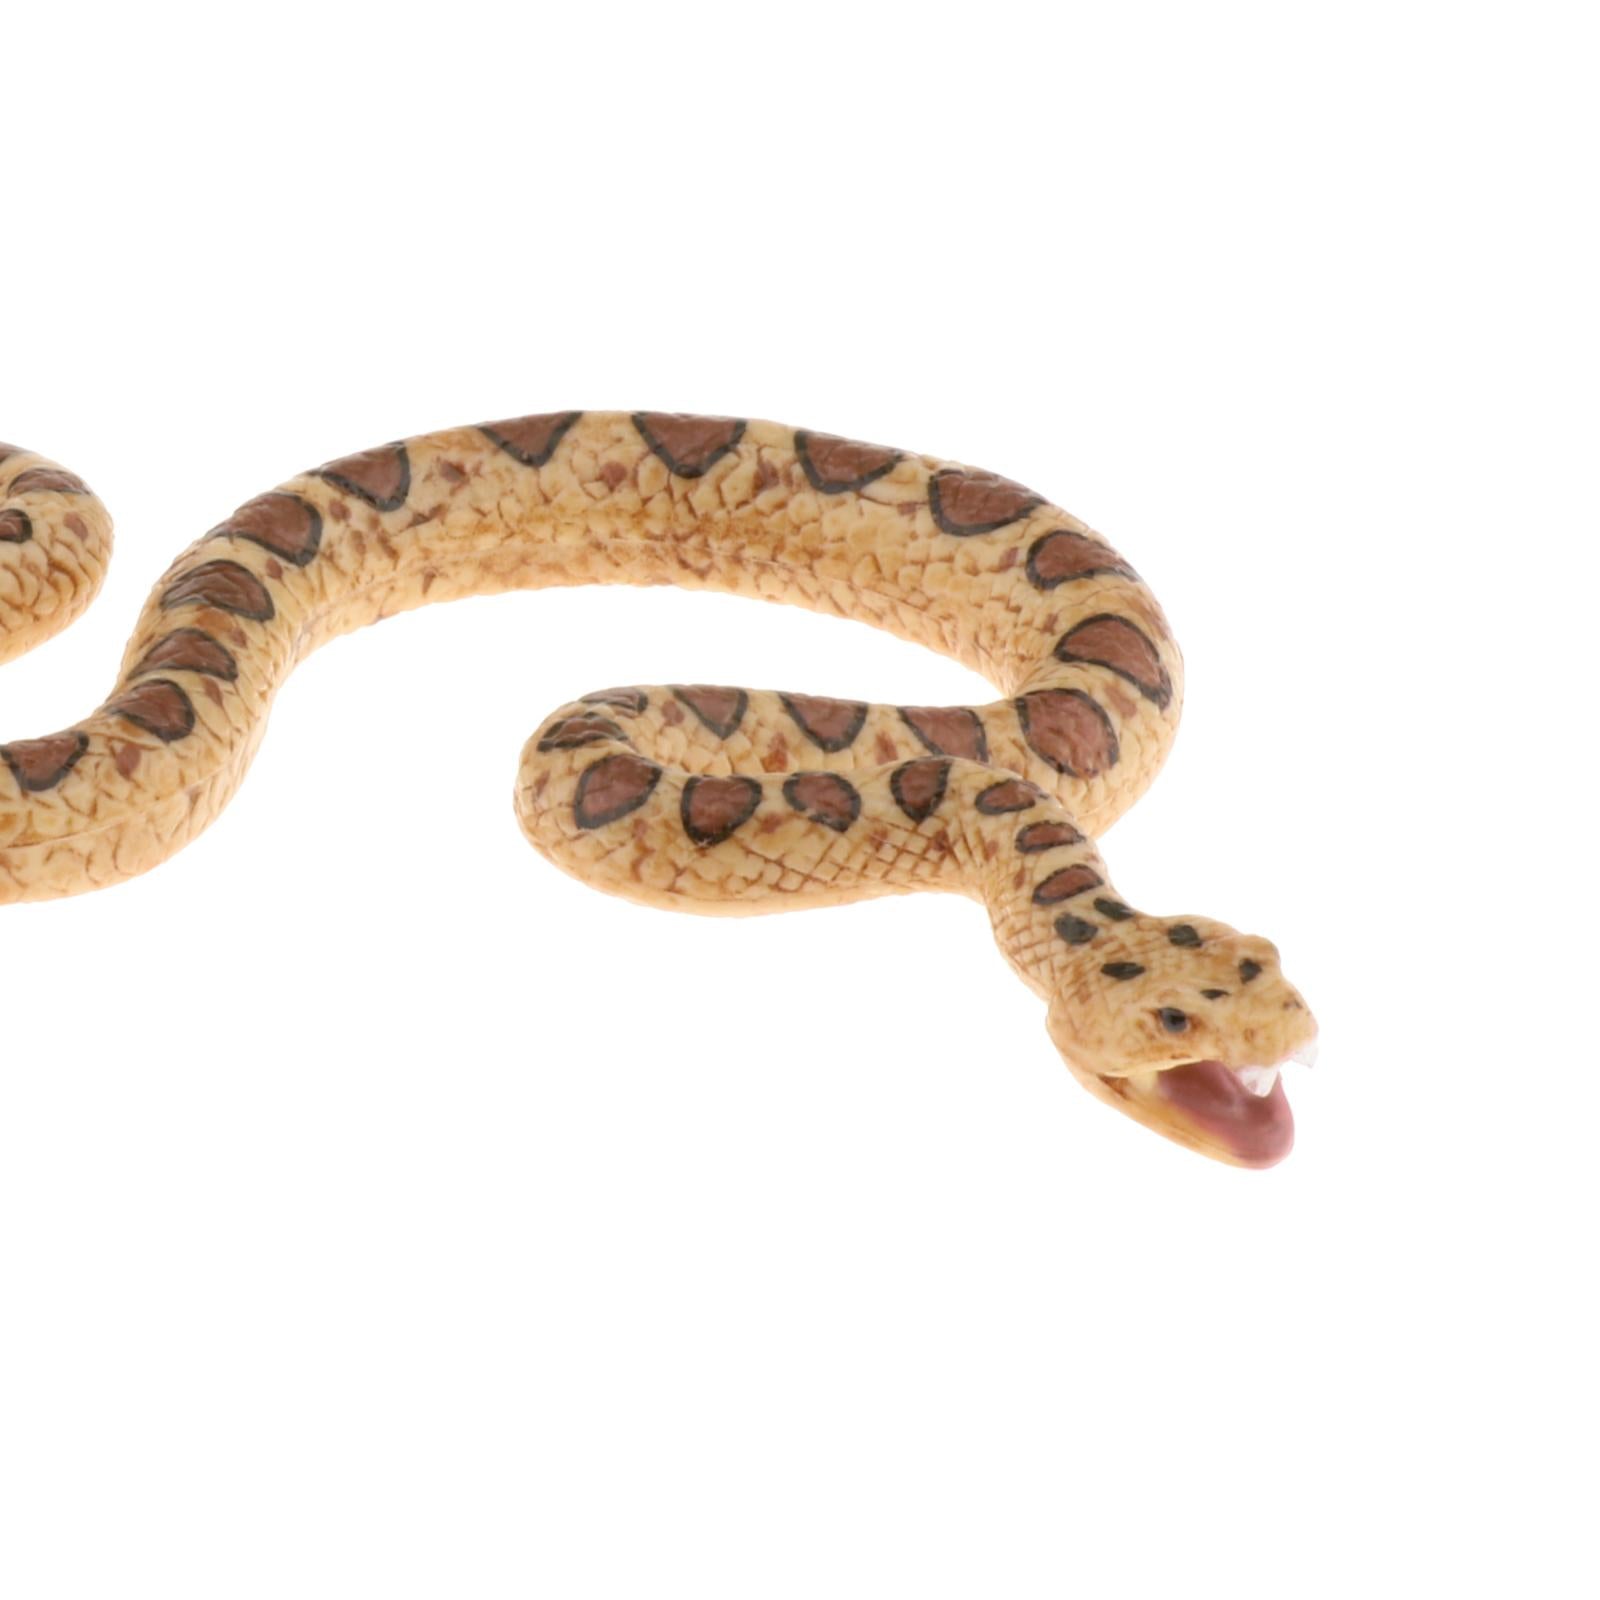 Plastic Snake Figurines Toys Collector for Kids Bag Filler Gift Rattlesnake